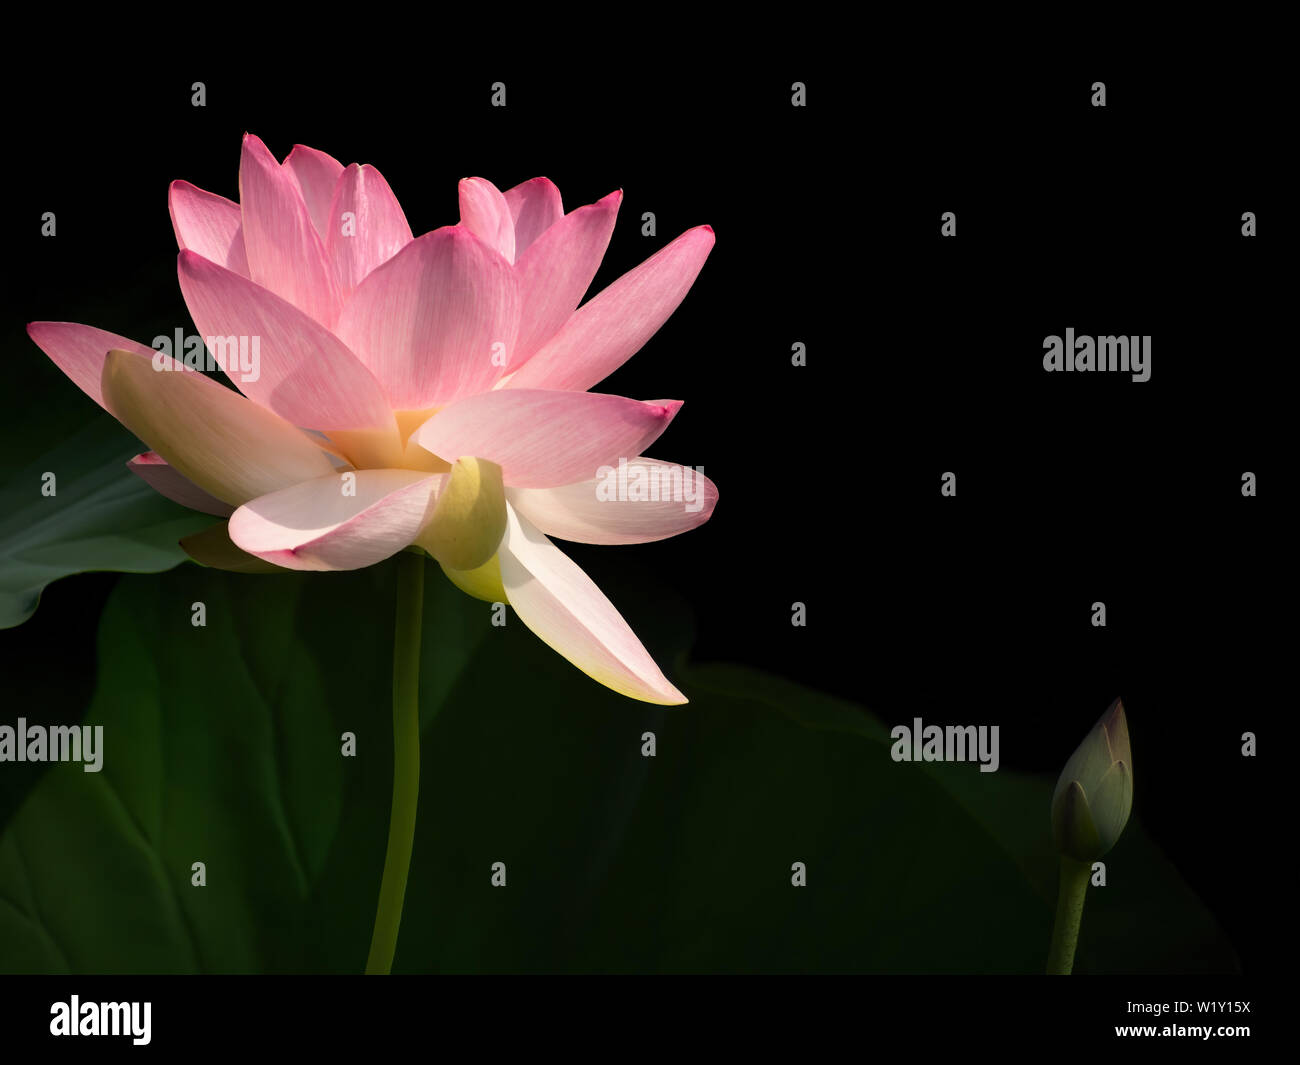 Nelumbo nucifera aka Indian or Sacred lotus. Pink flower with bud. Dark background. Stock Photo